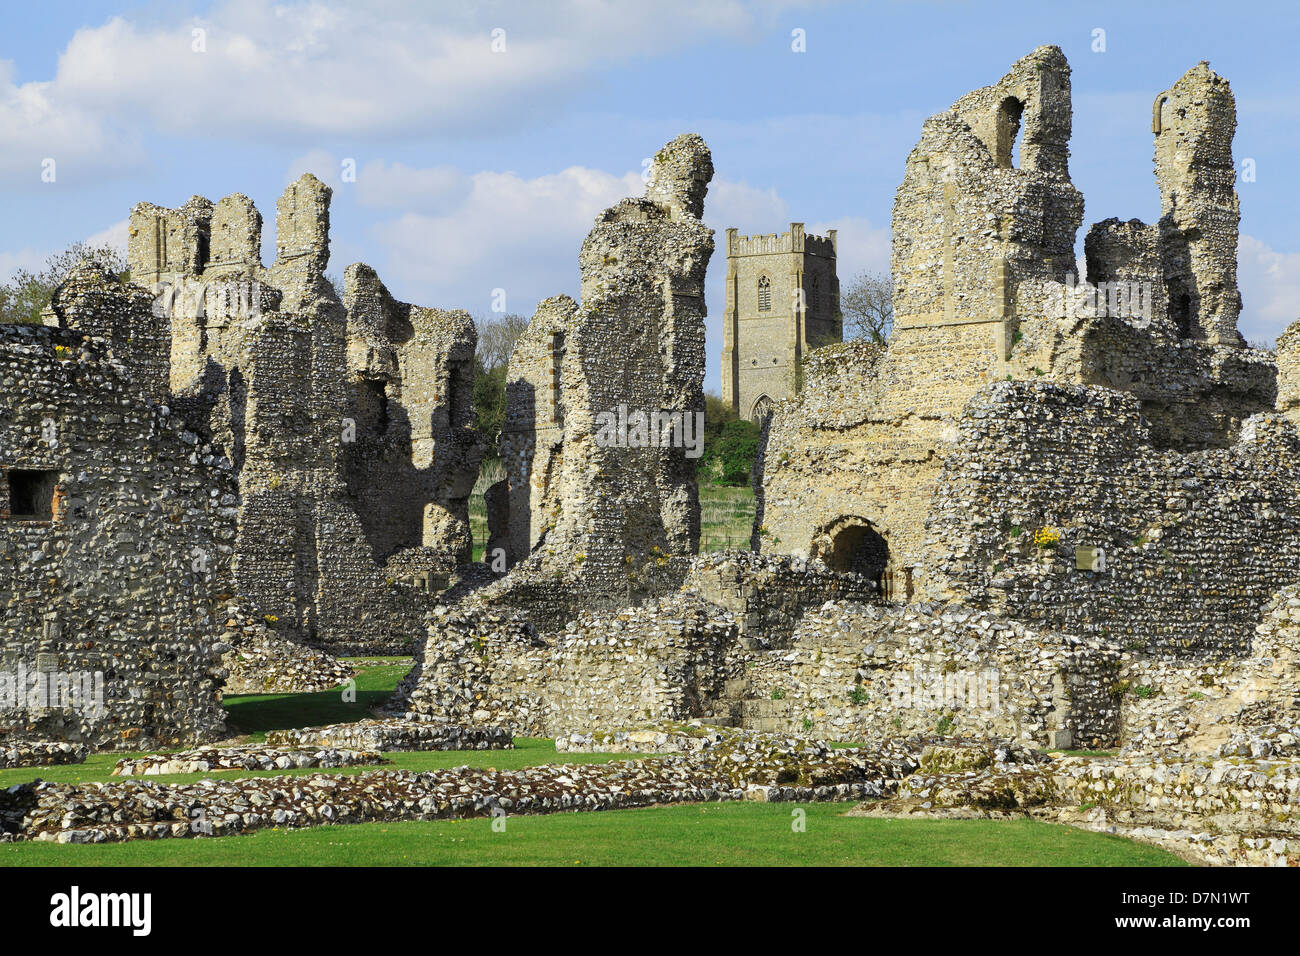 Castle Acre Priory, Norfolk,  monastic ruins, England, UK, Cluniac medieval monastery, English priories Stock Photo